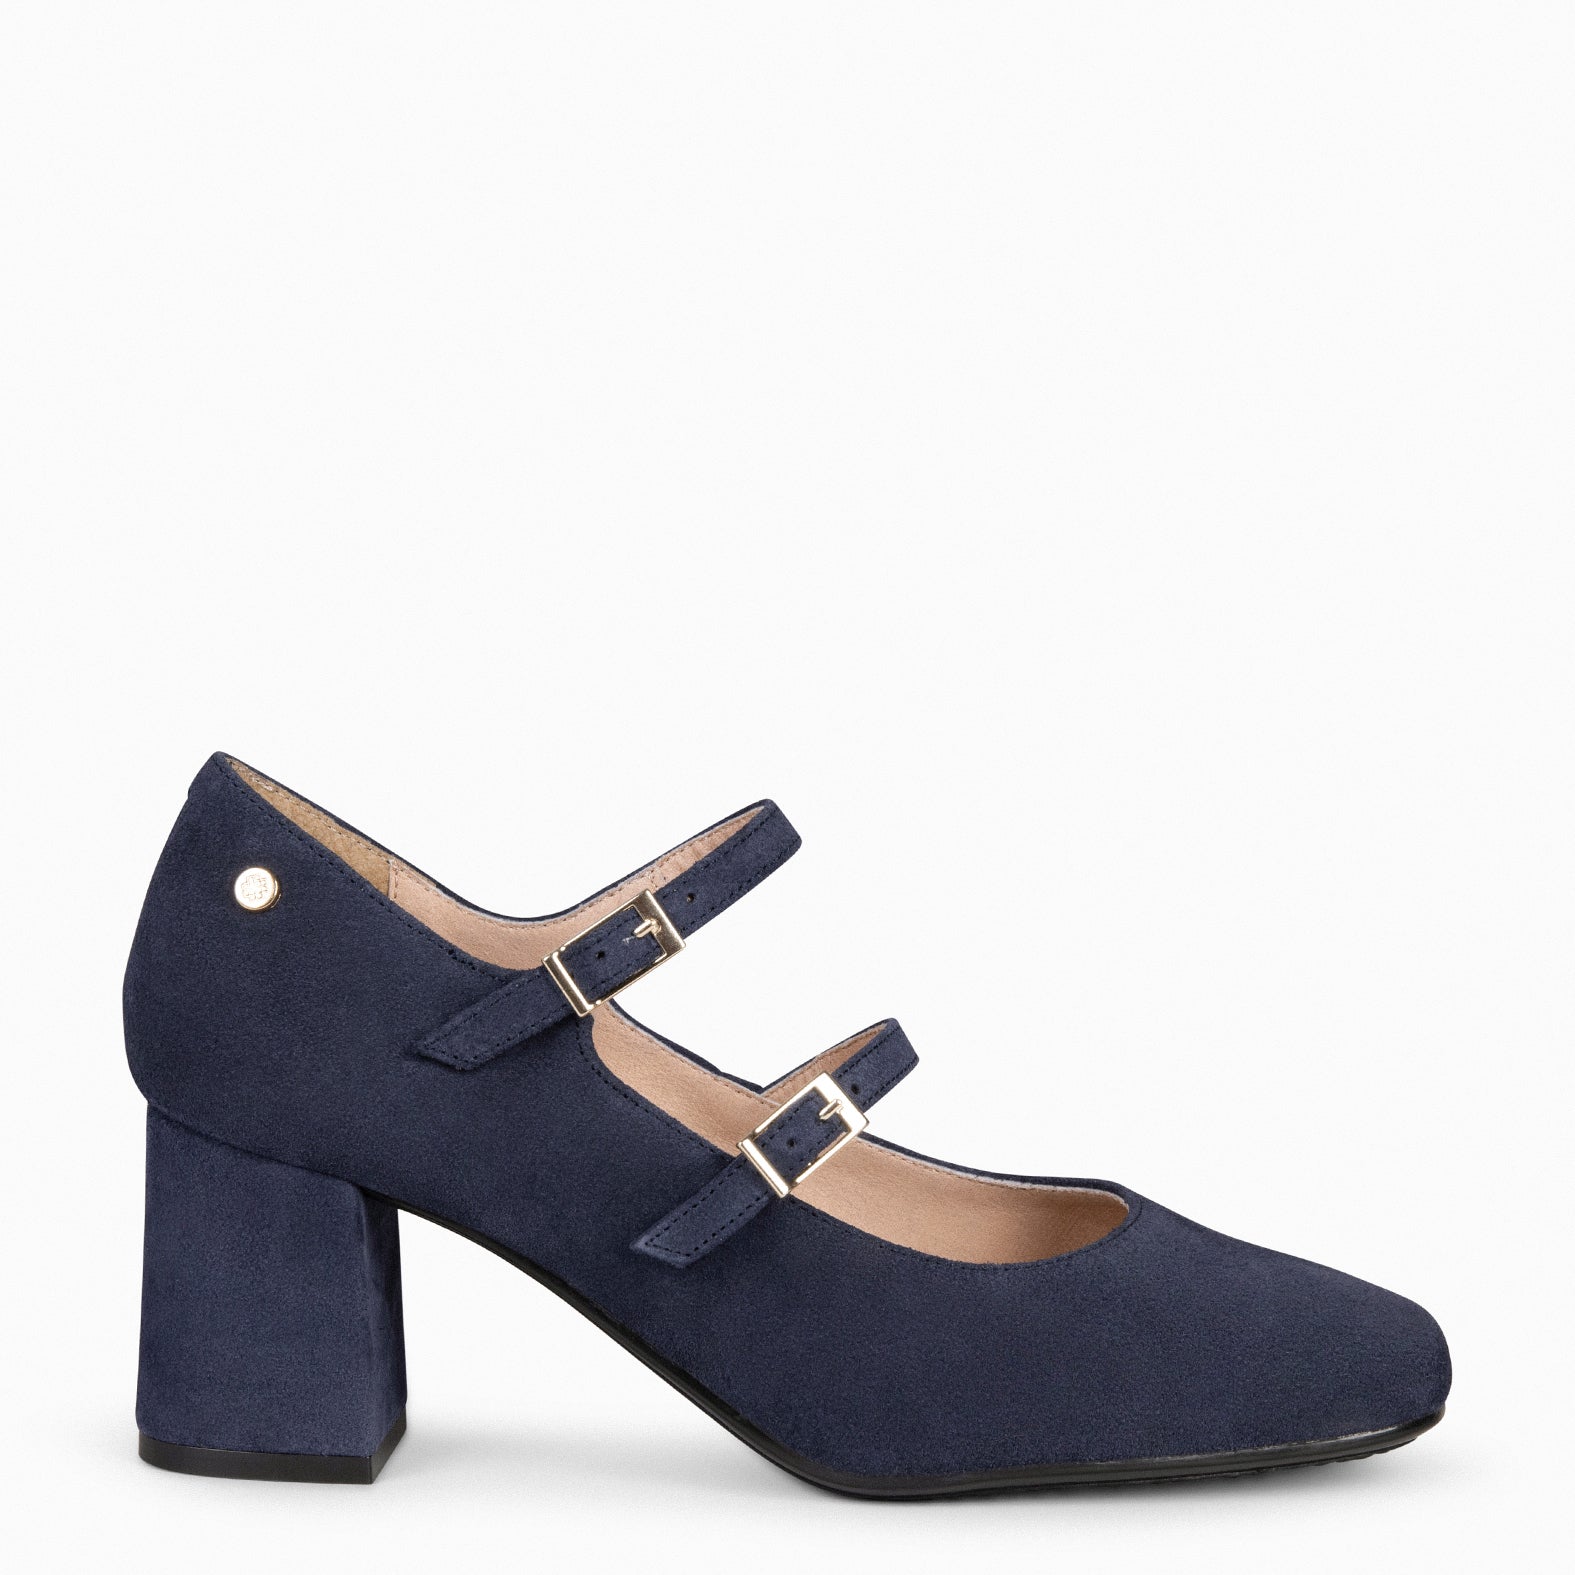 FEBRIS – NAVY leather heel with straps